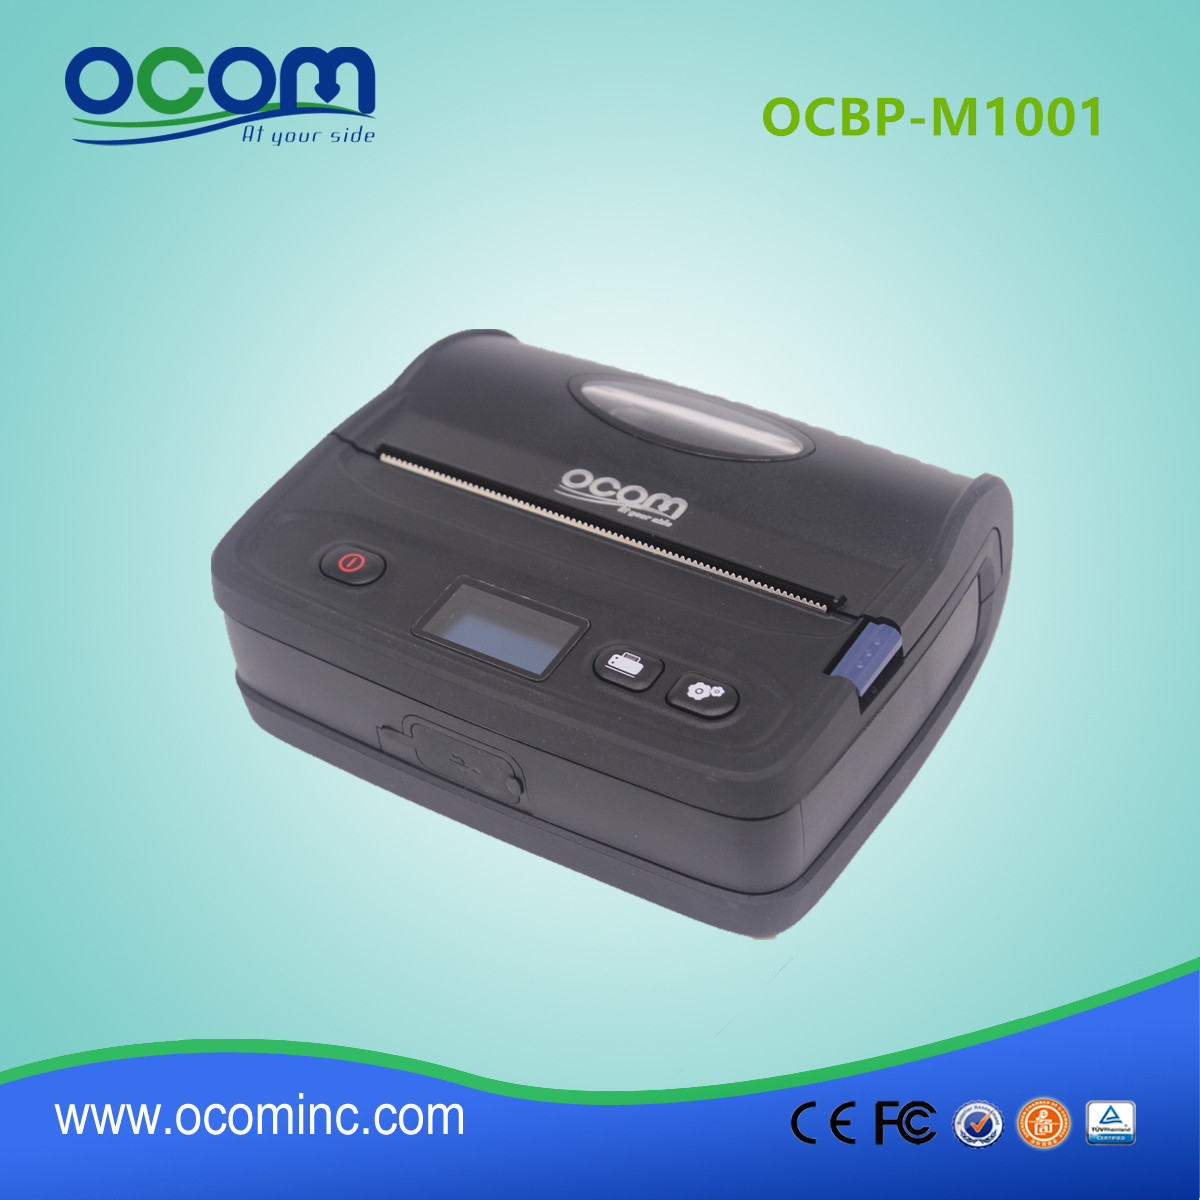 OCBP-M1001 4 inch Mini Handheld mobiele labelprinter